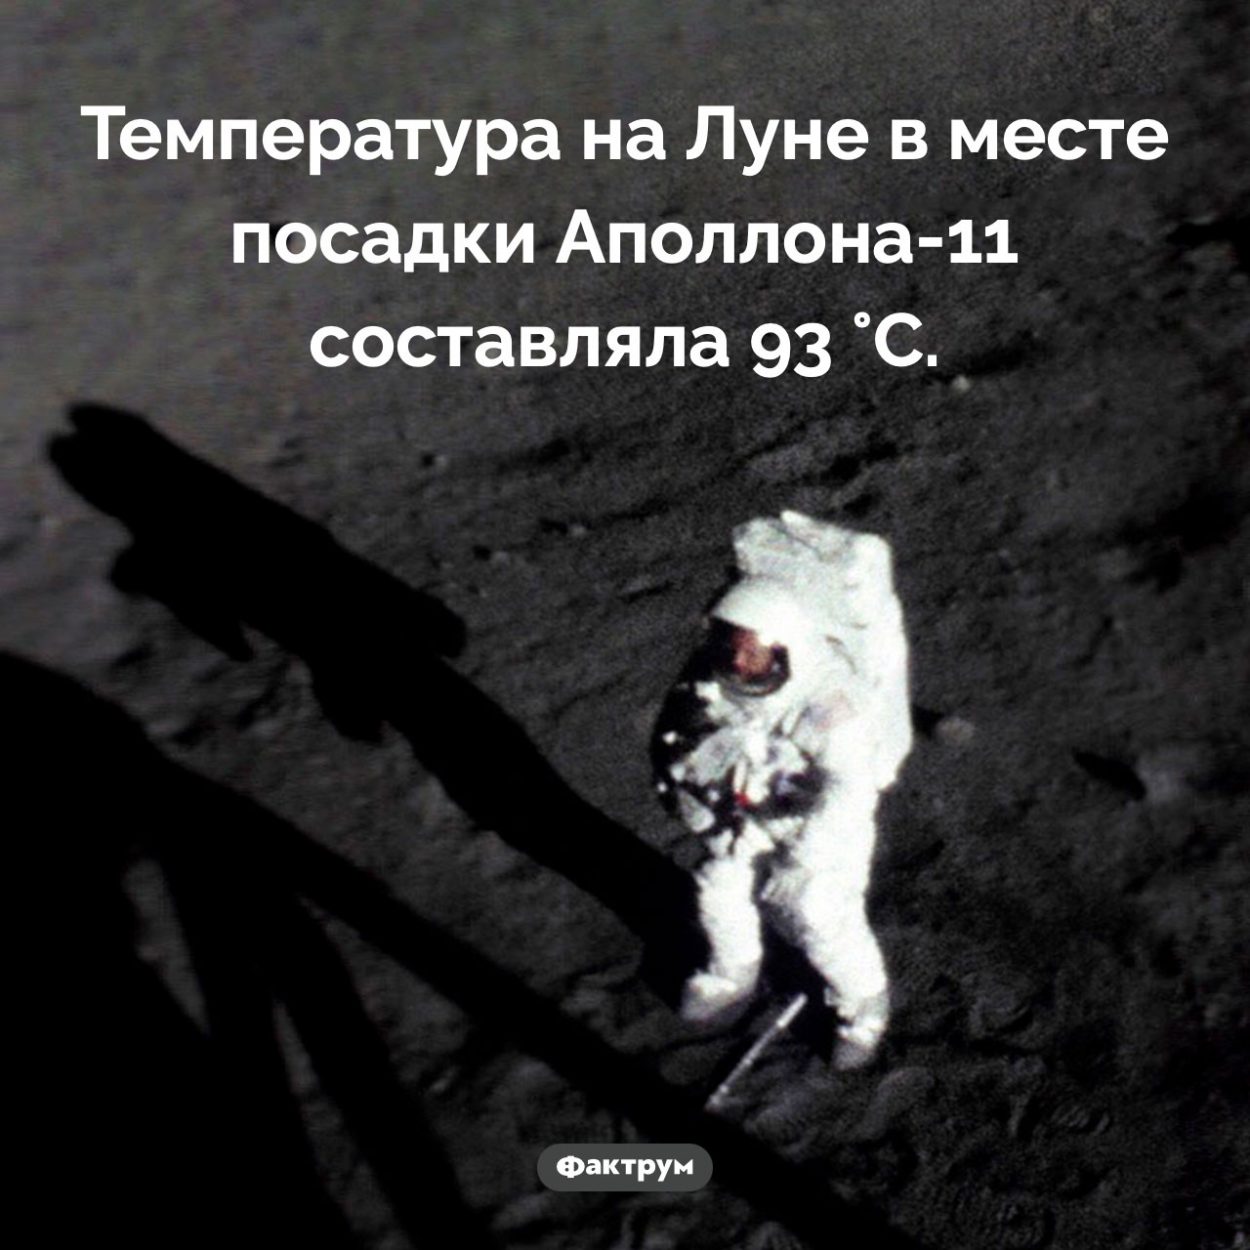 Температура на Луне. Температура на Луне в месте посадки Аполлона-11 составляла 93 °C.